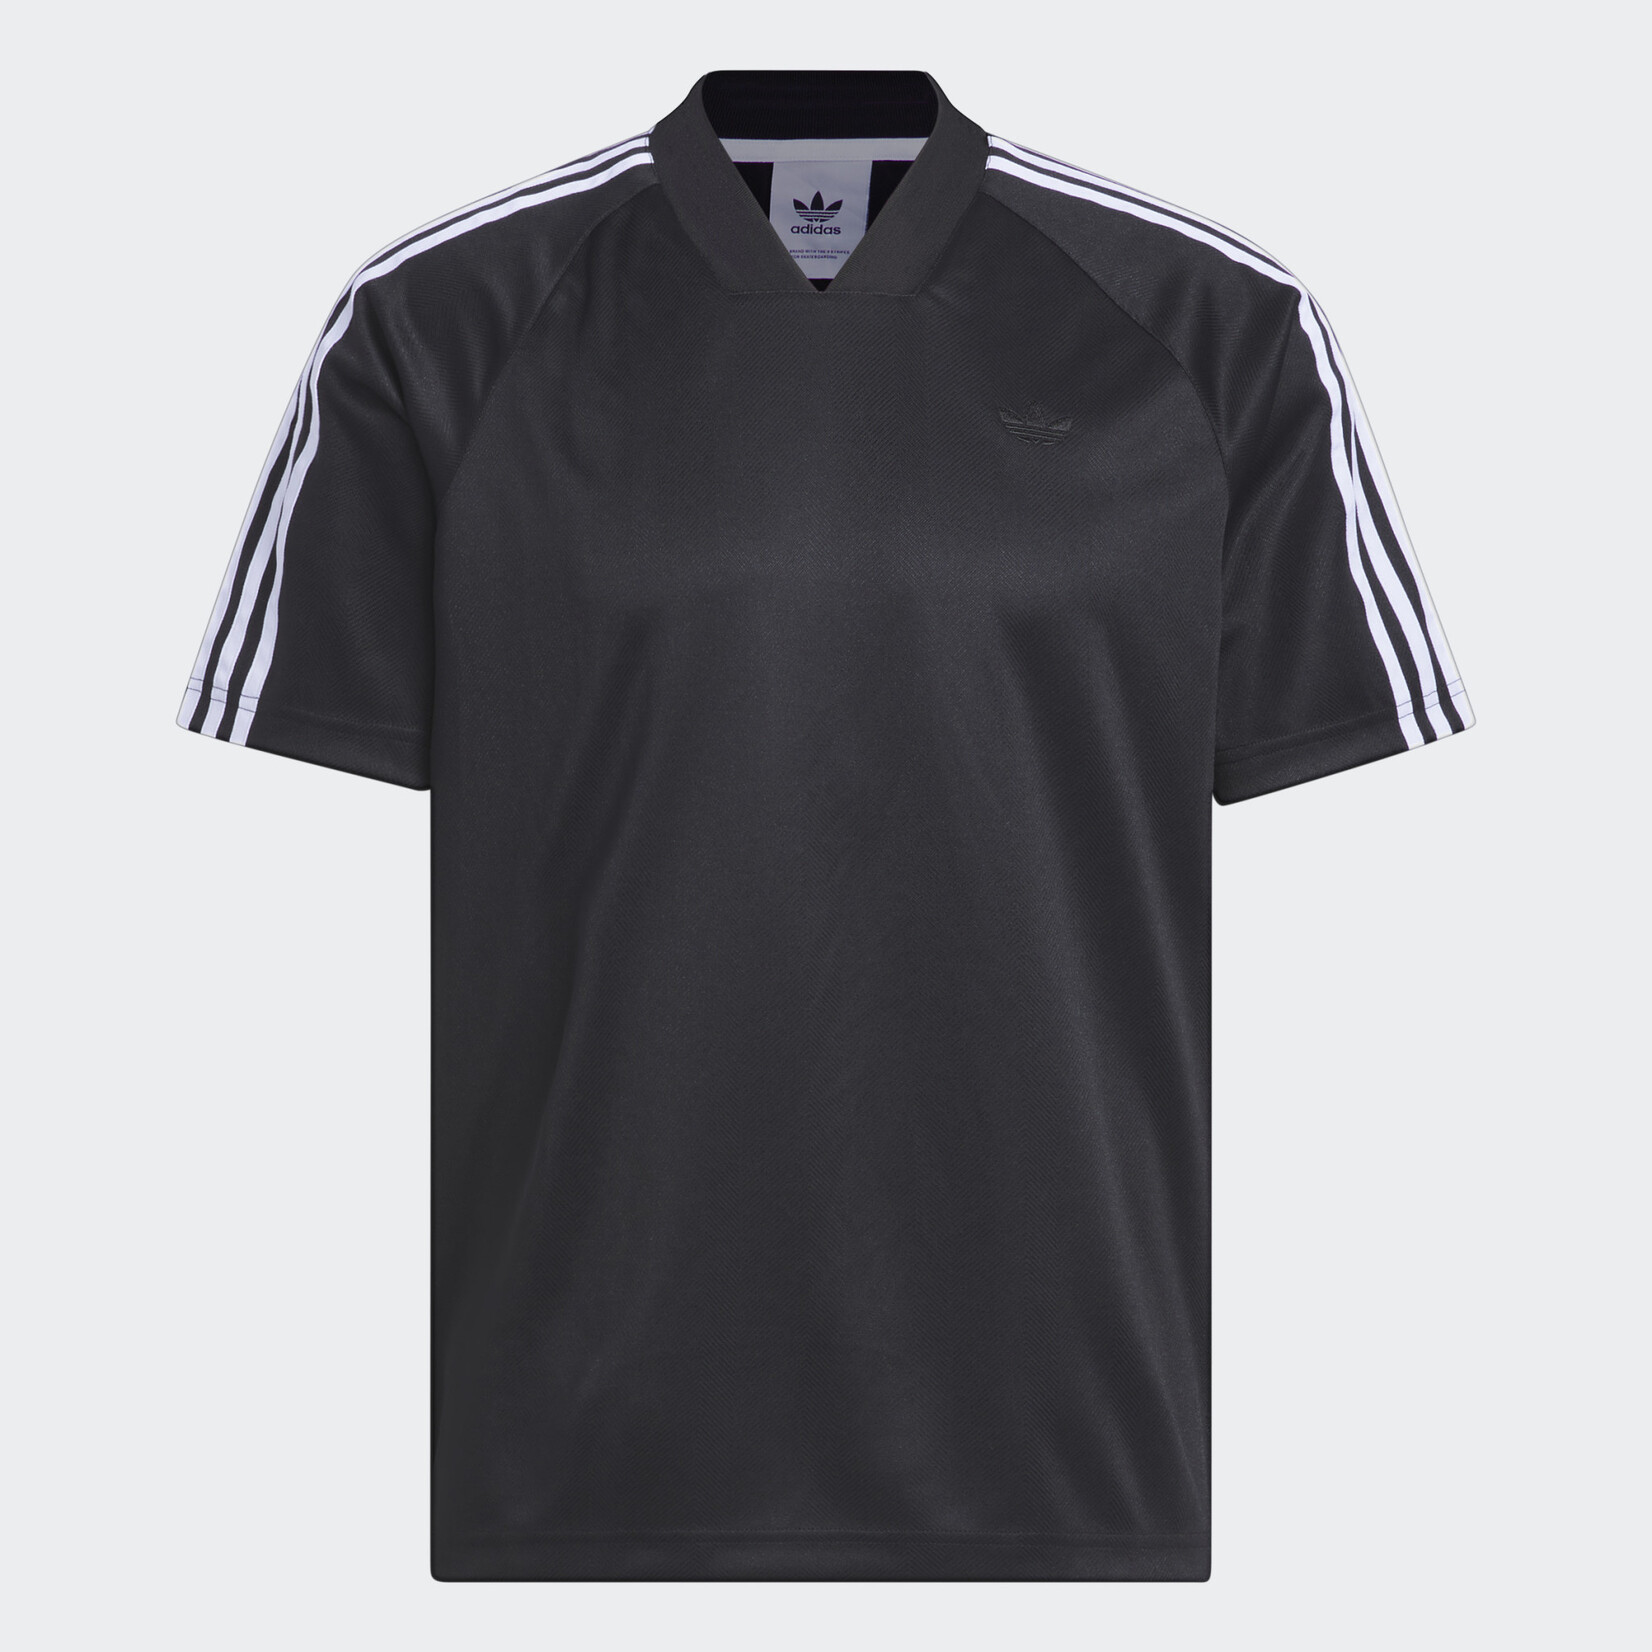 Adidas Herringbone Jersey Black